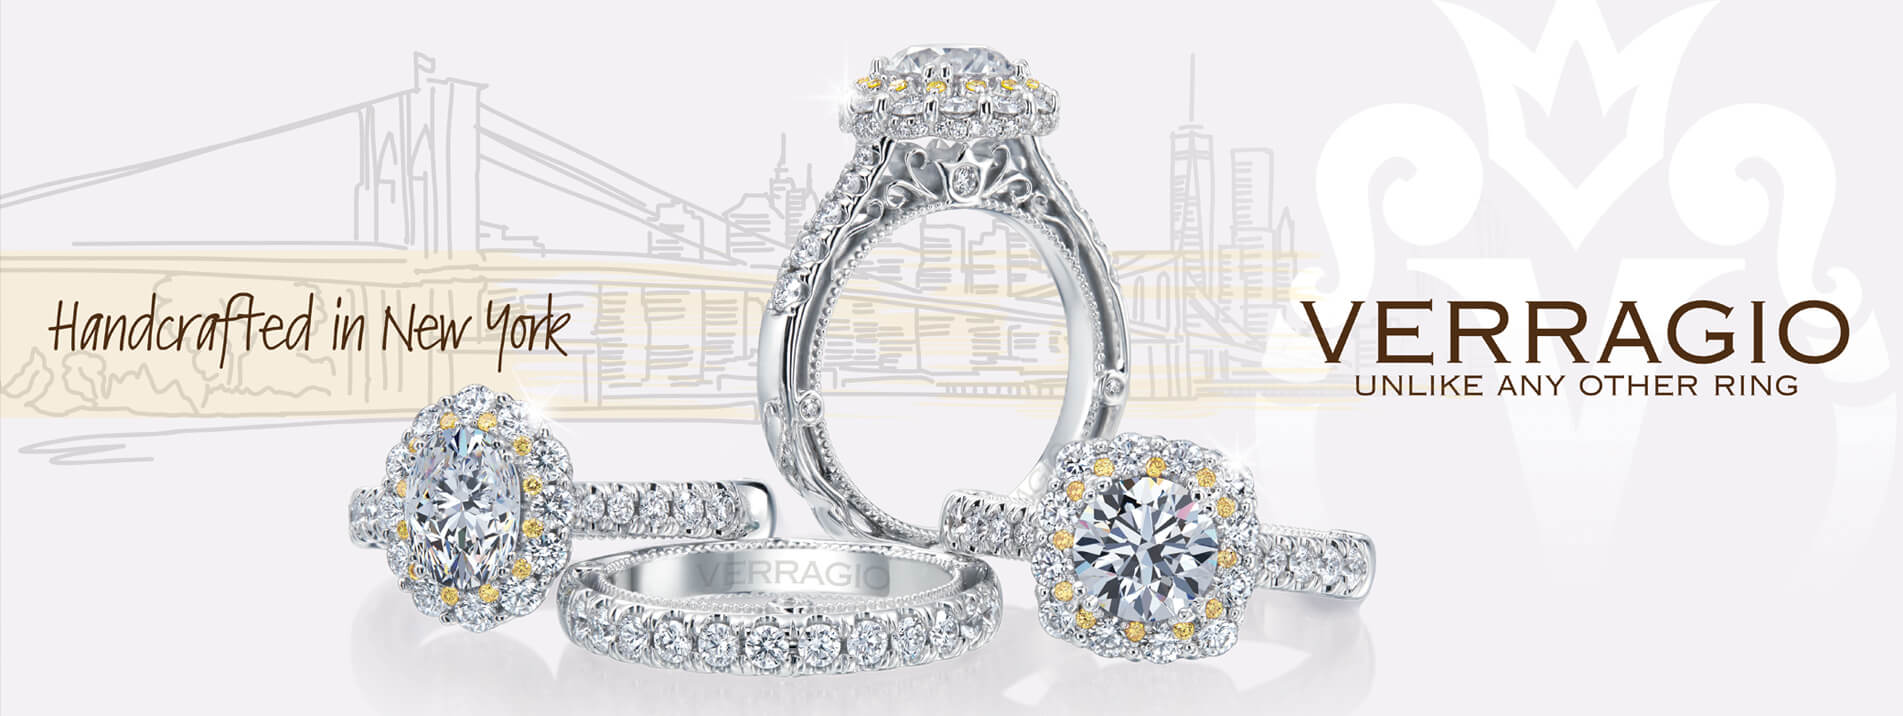 Verragio Engagement Band & Engagement Ring Bridal Set With Custom Natural Diamonds